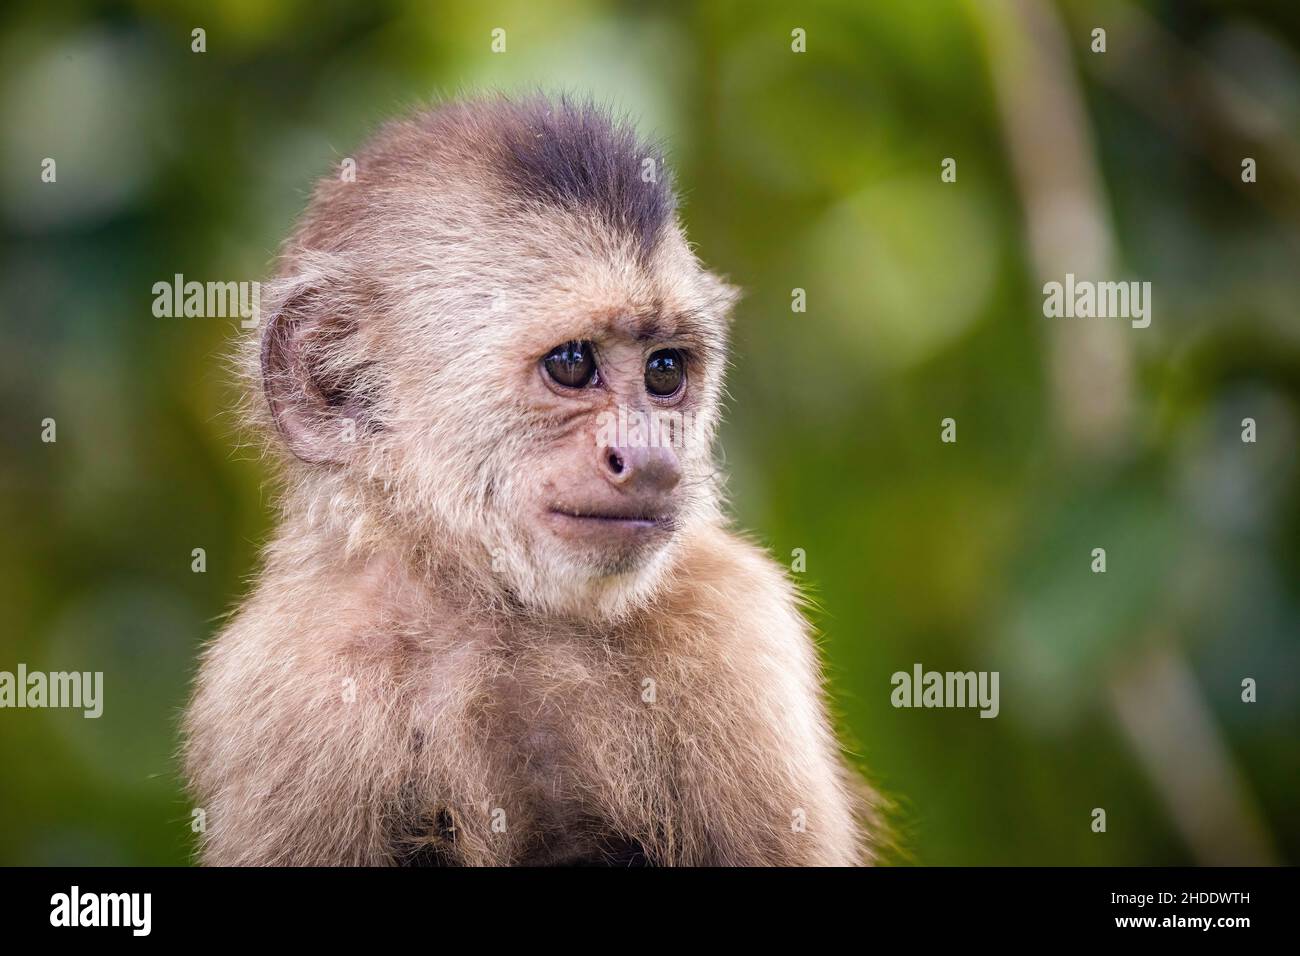 Beautiful portrait of capuchin wild monkey close up smiling at day Stock Photo